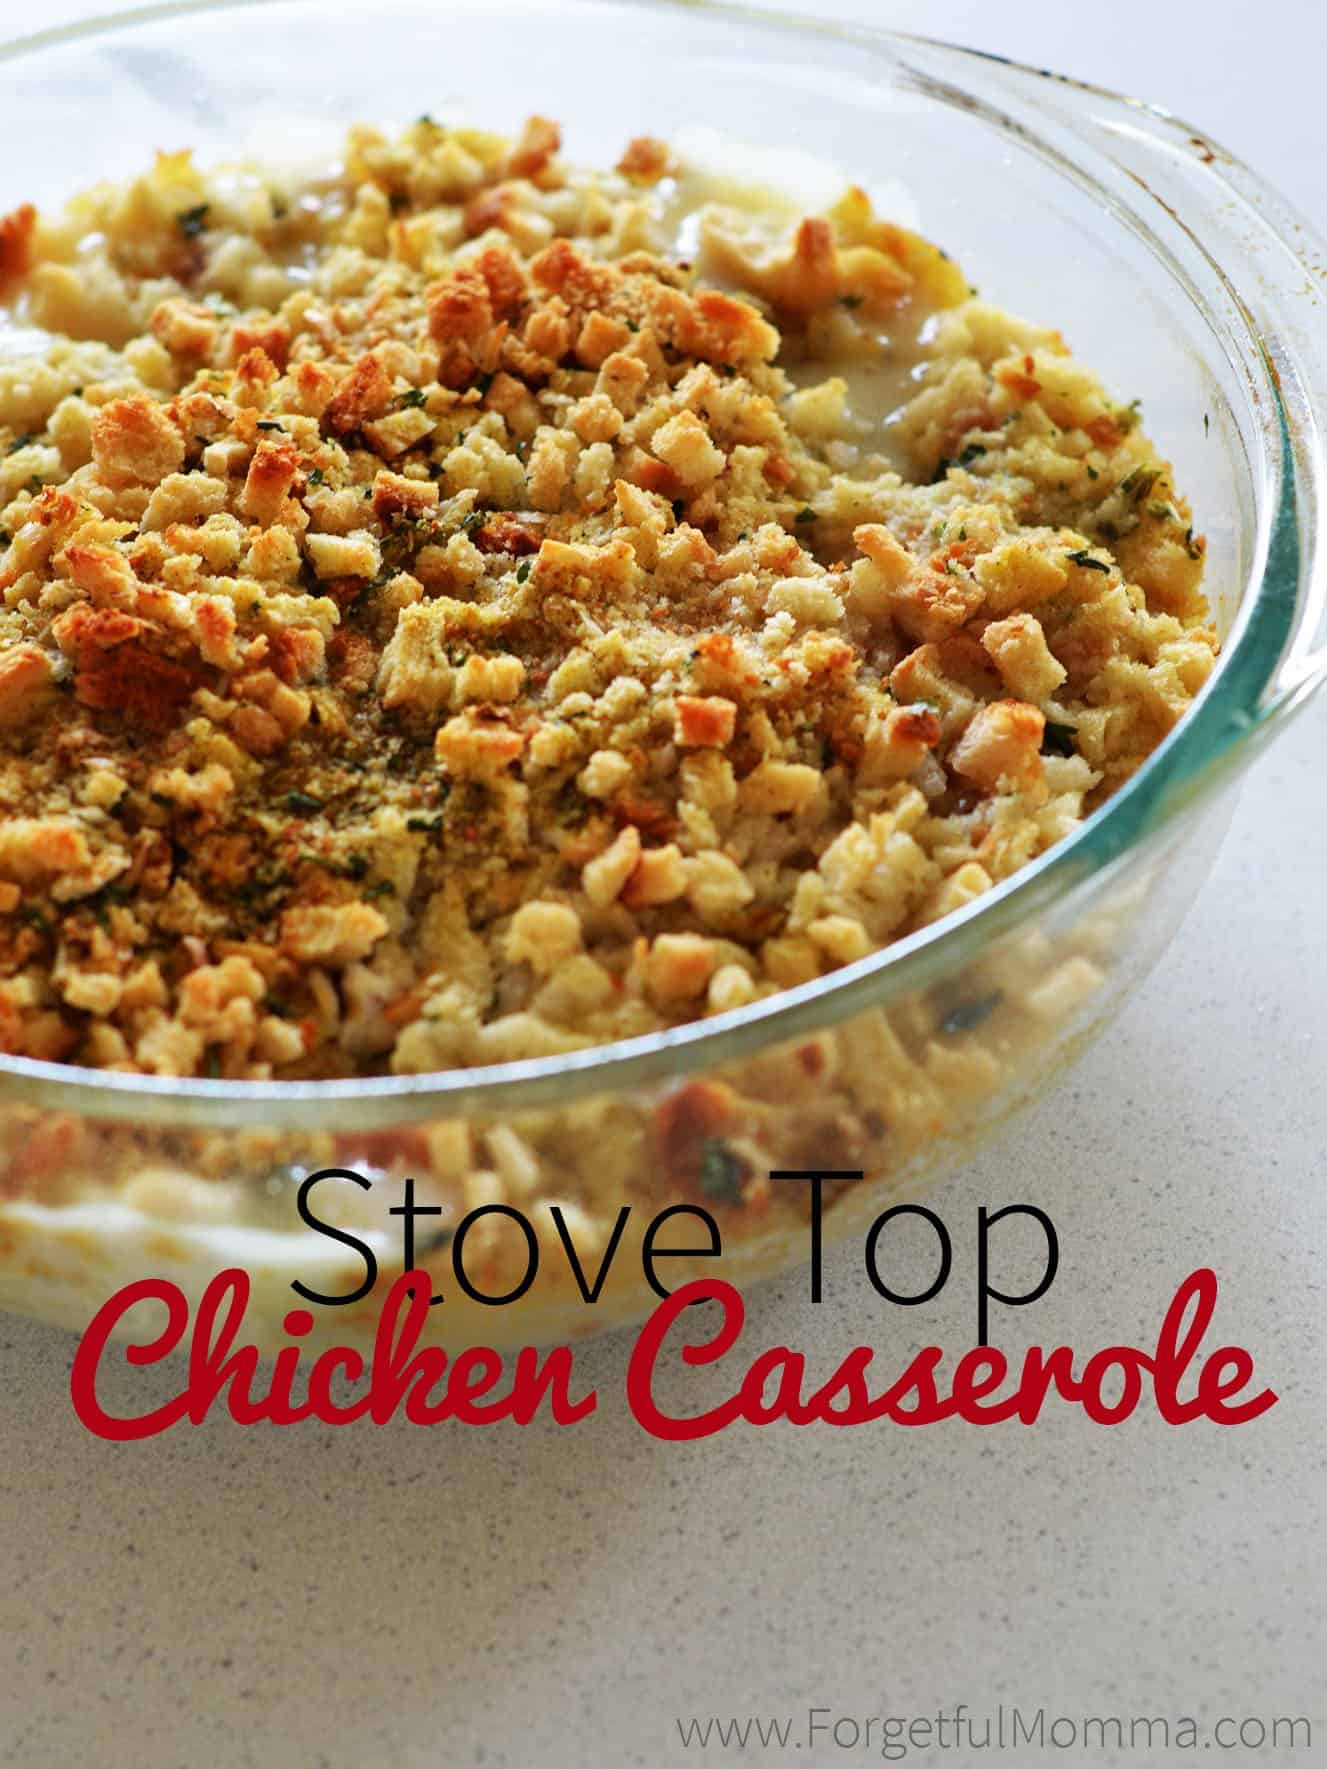 Stove Top Chicken Casserole